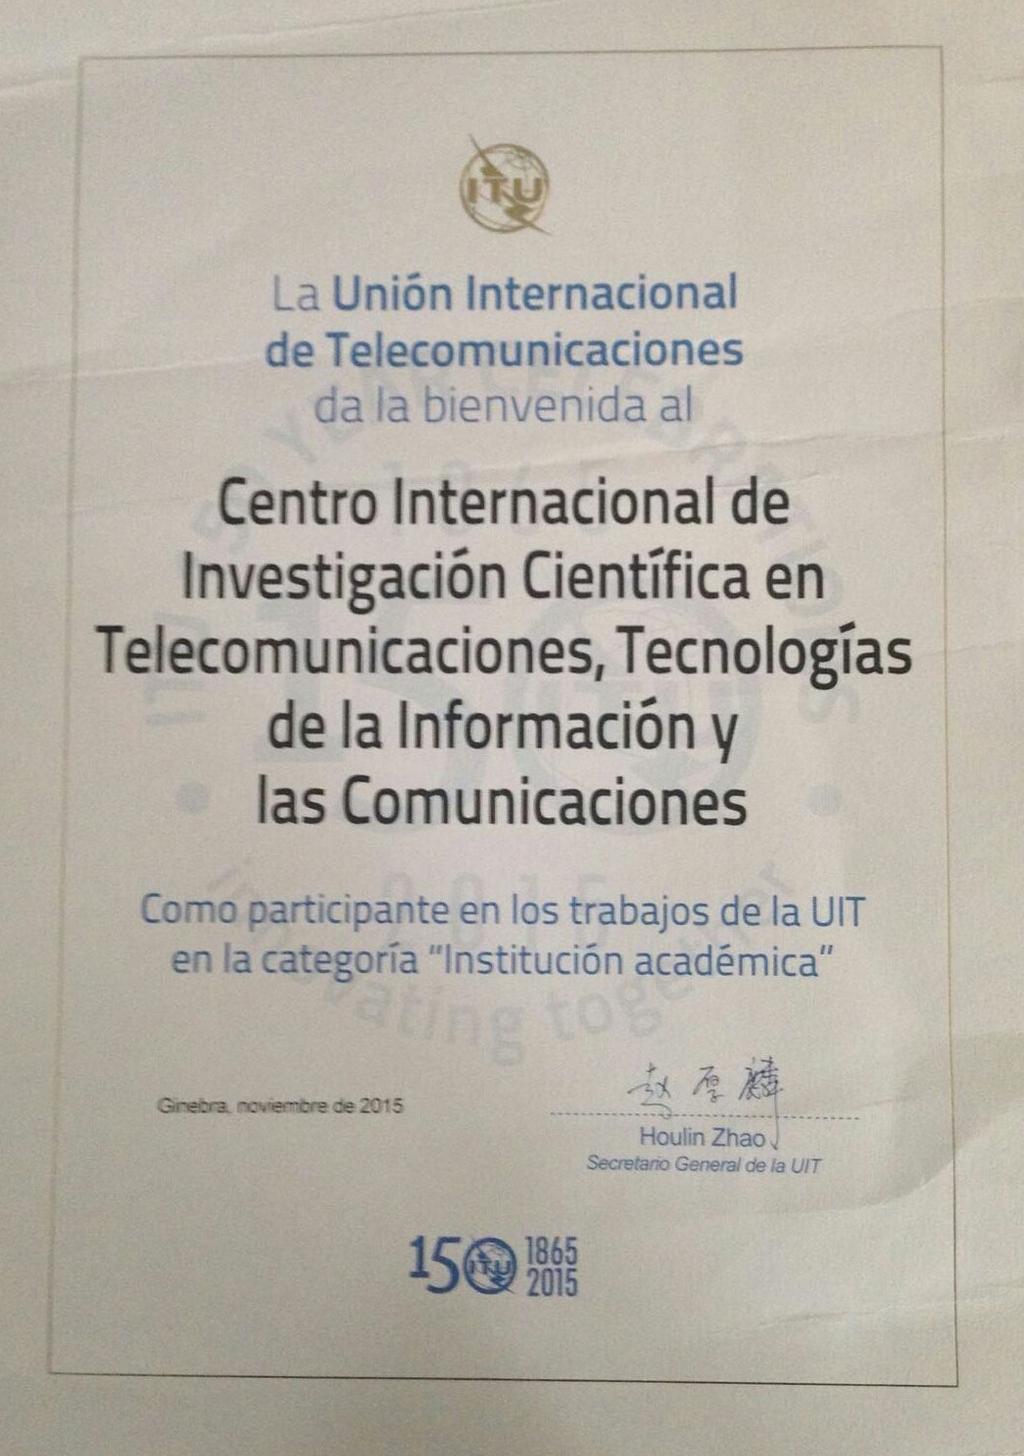 Internacional de Telecomunicaciones